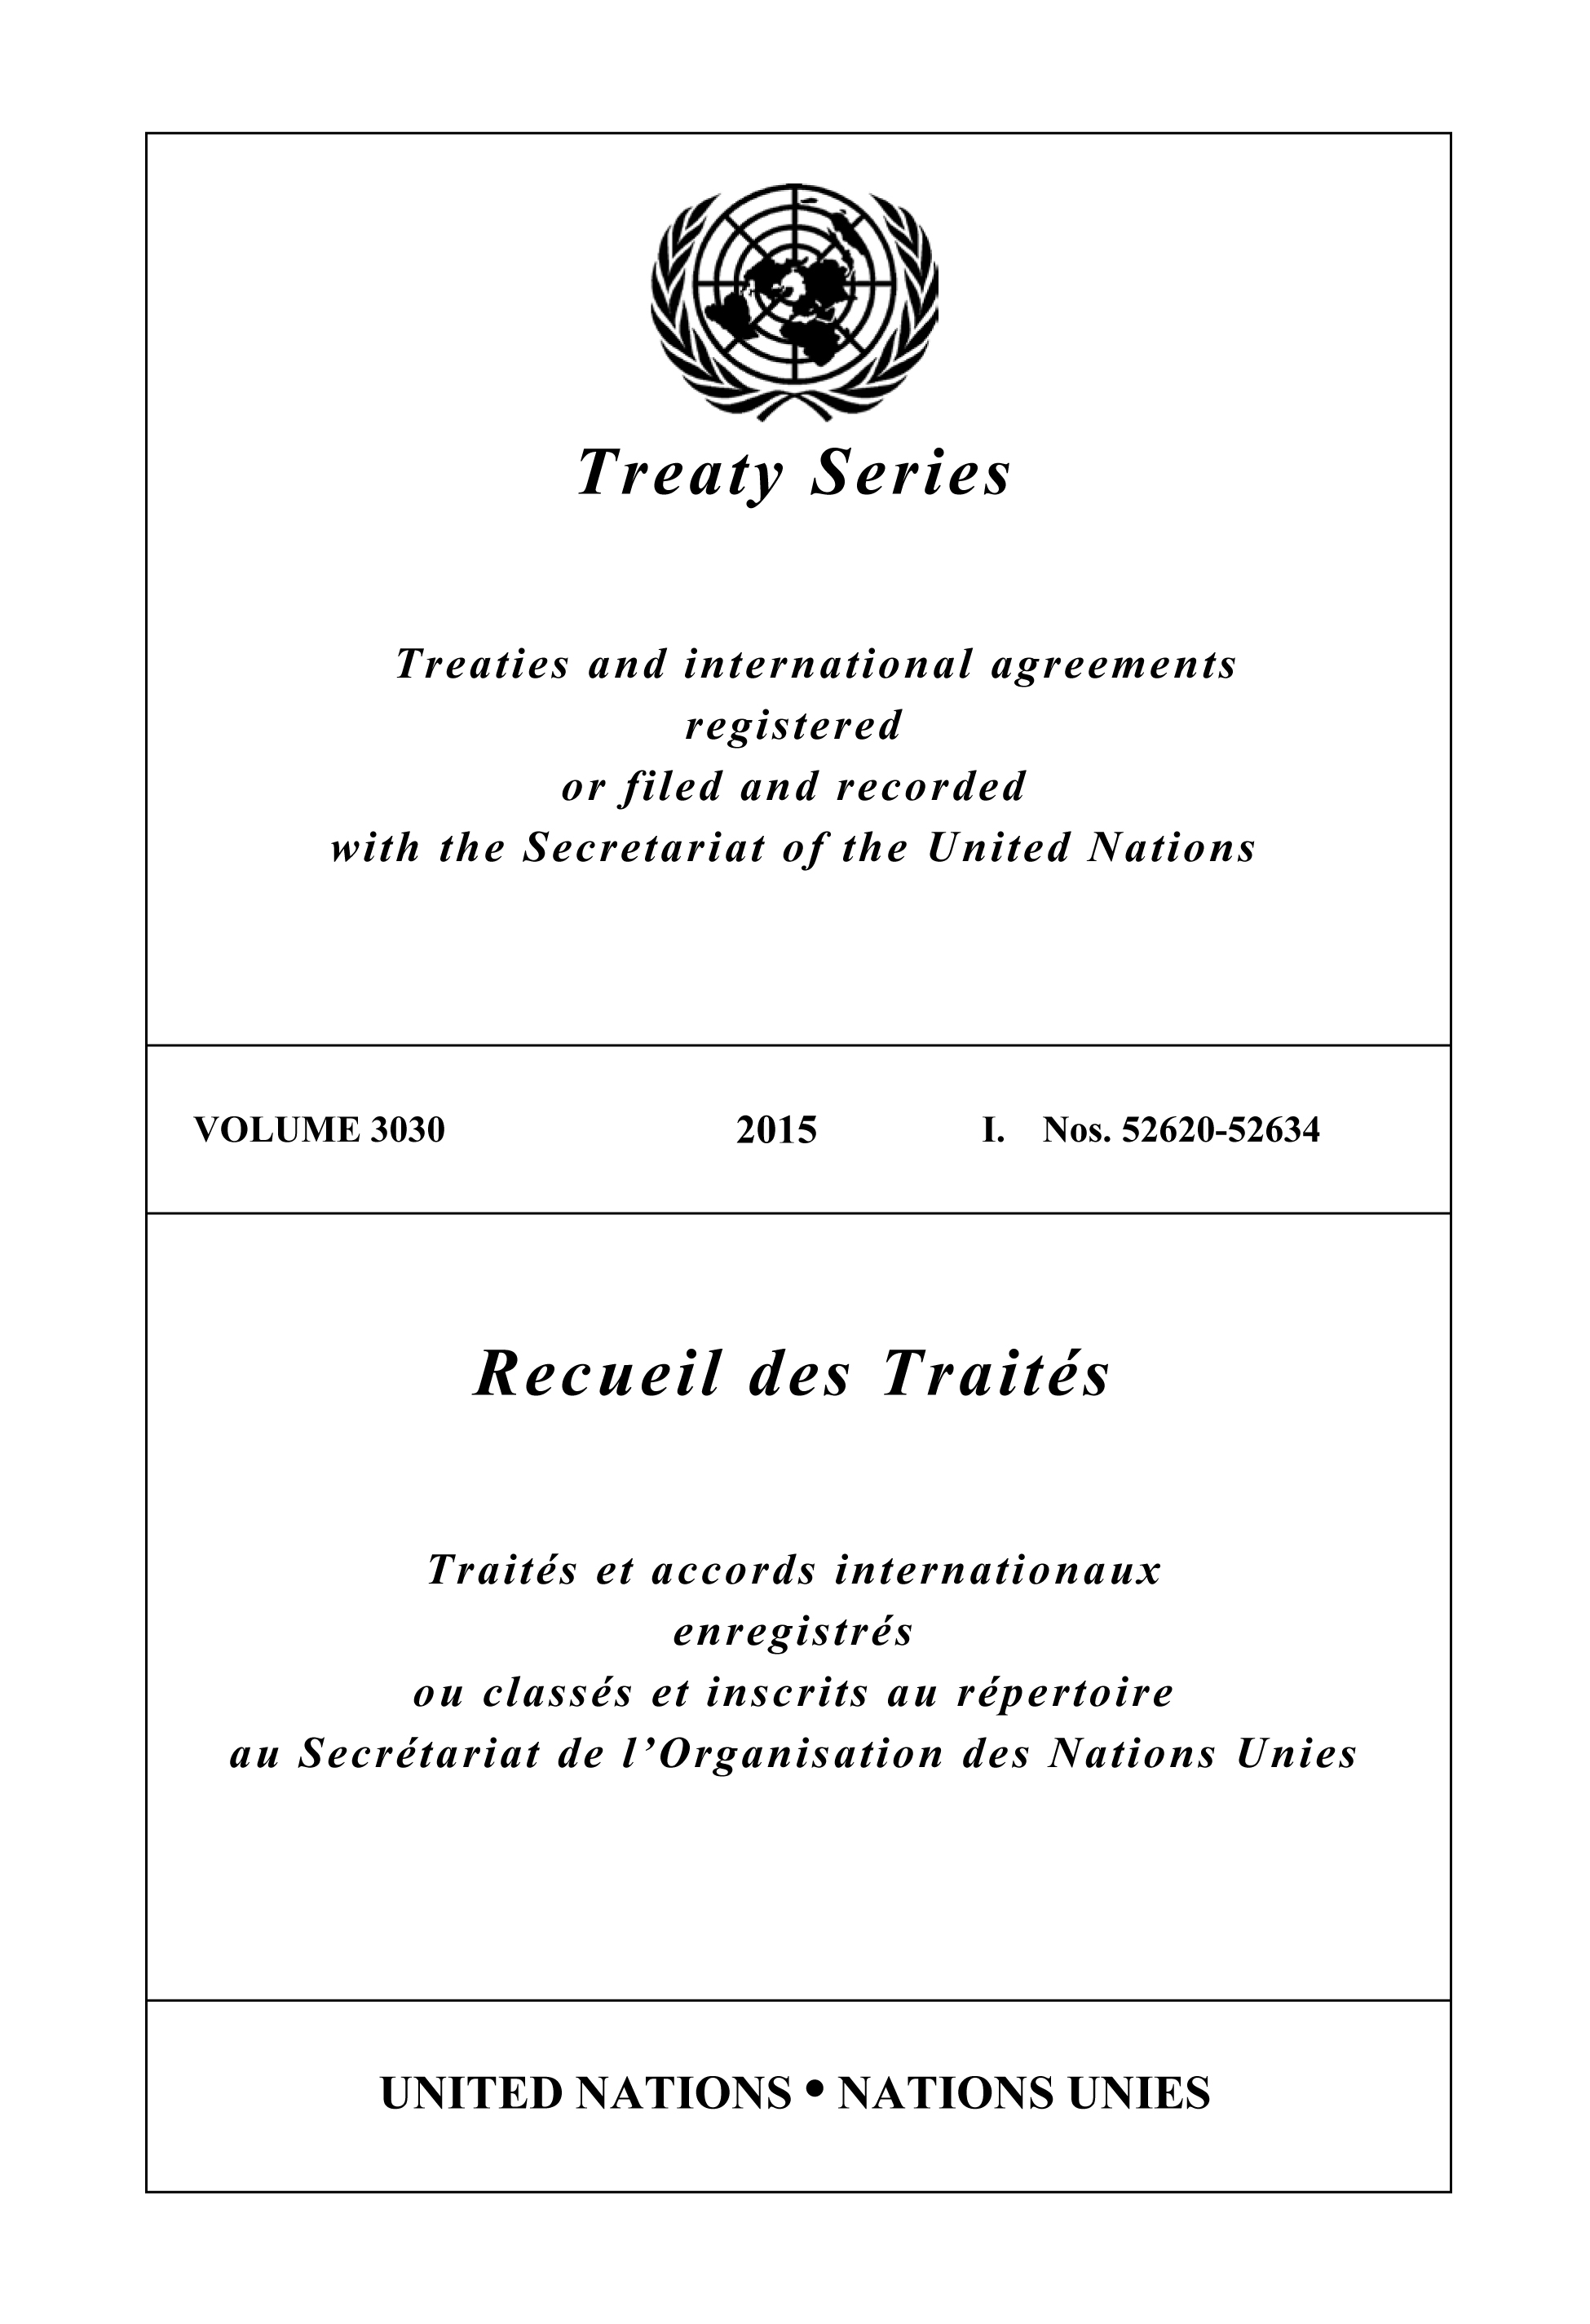 image of Treaty Series 3030